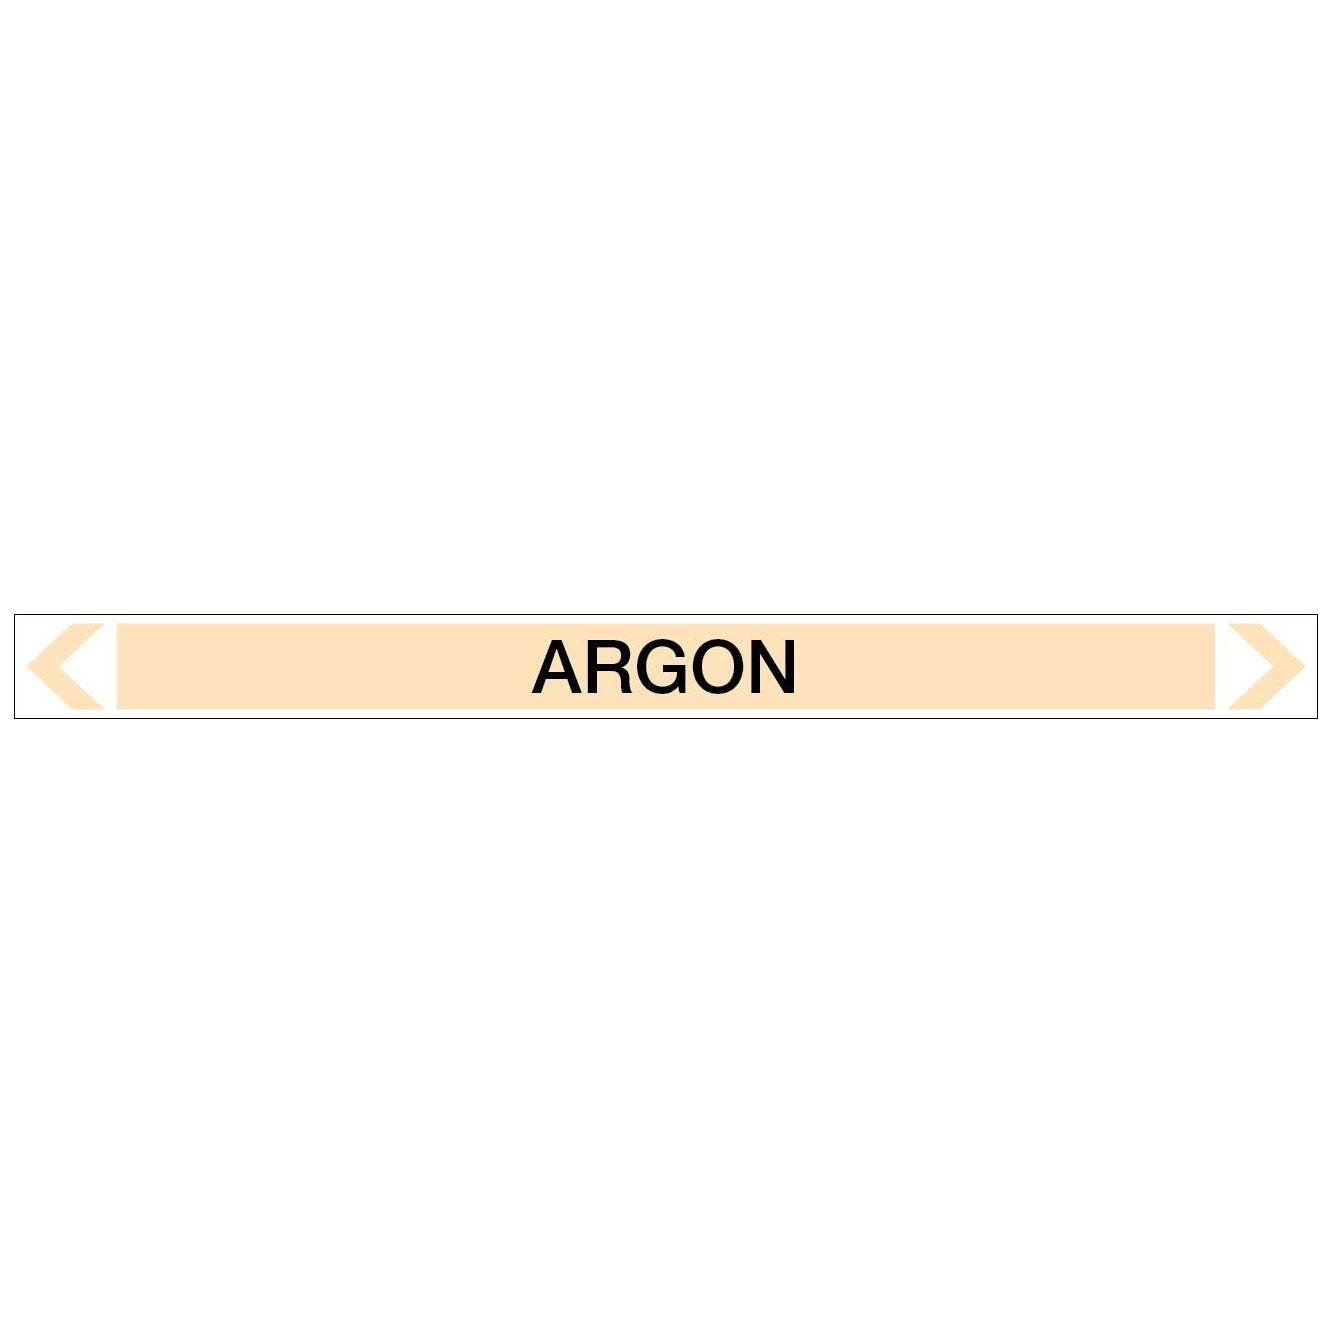 Gases - Argon - Pipe Marker Sticker